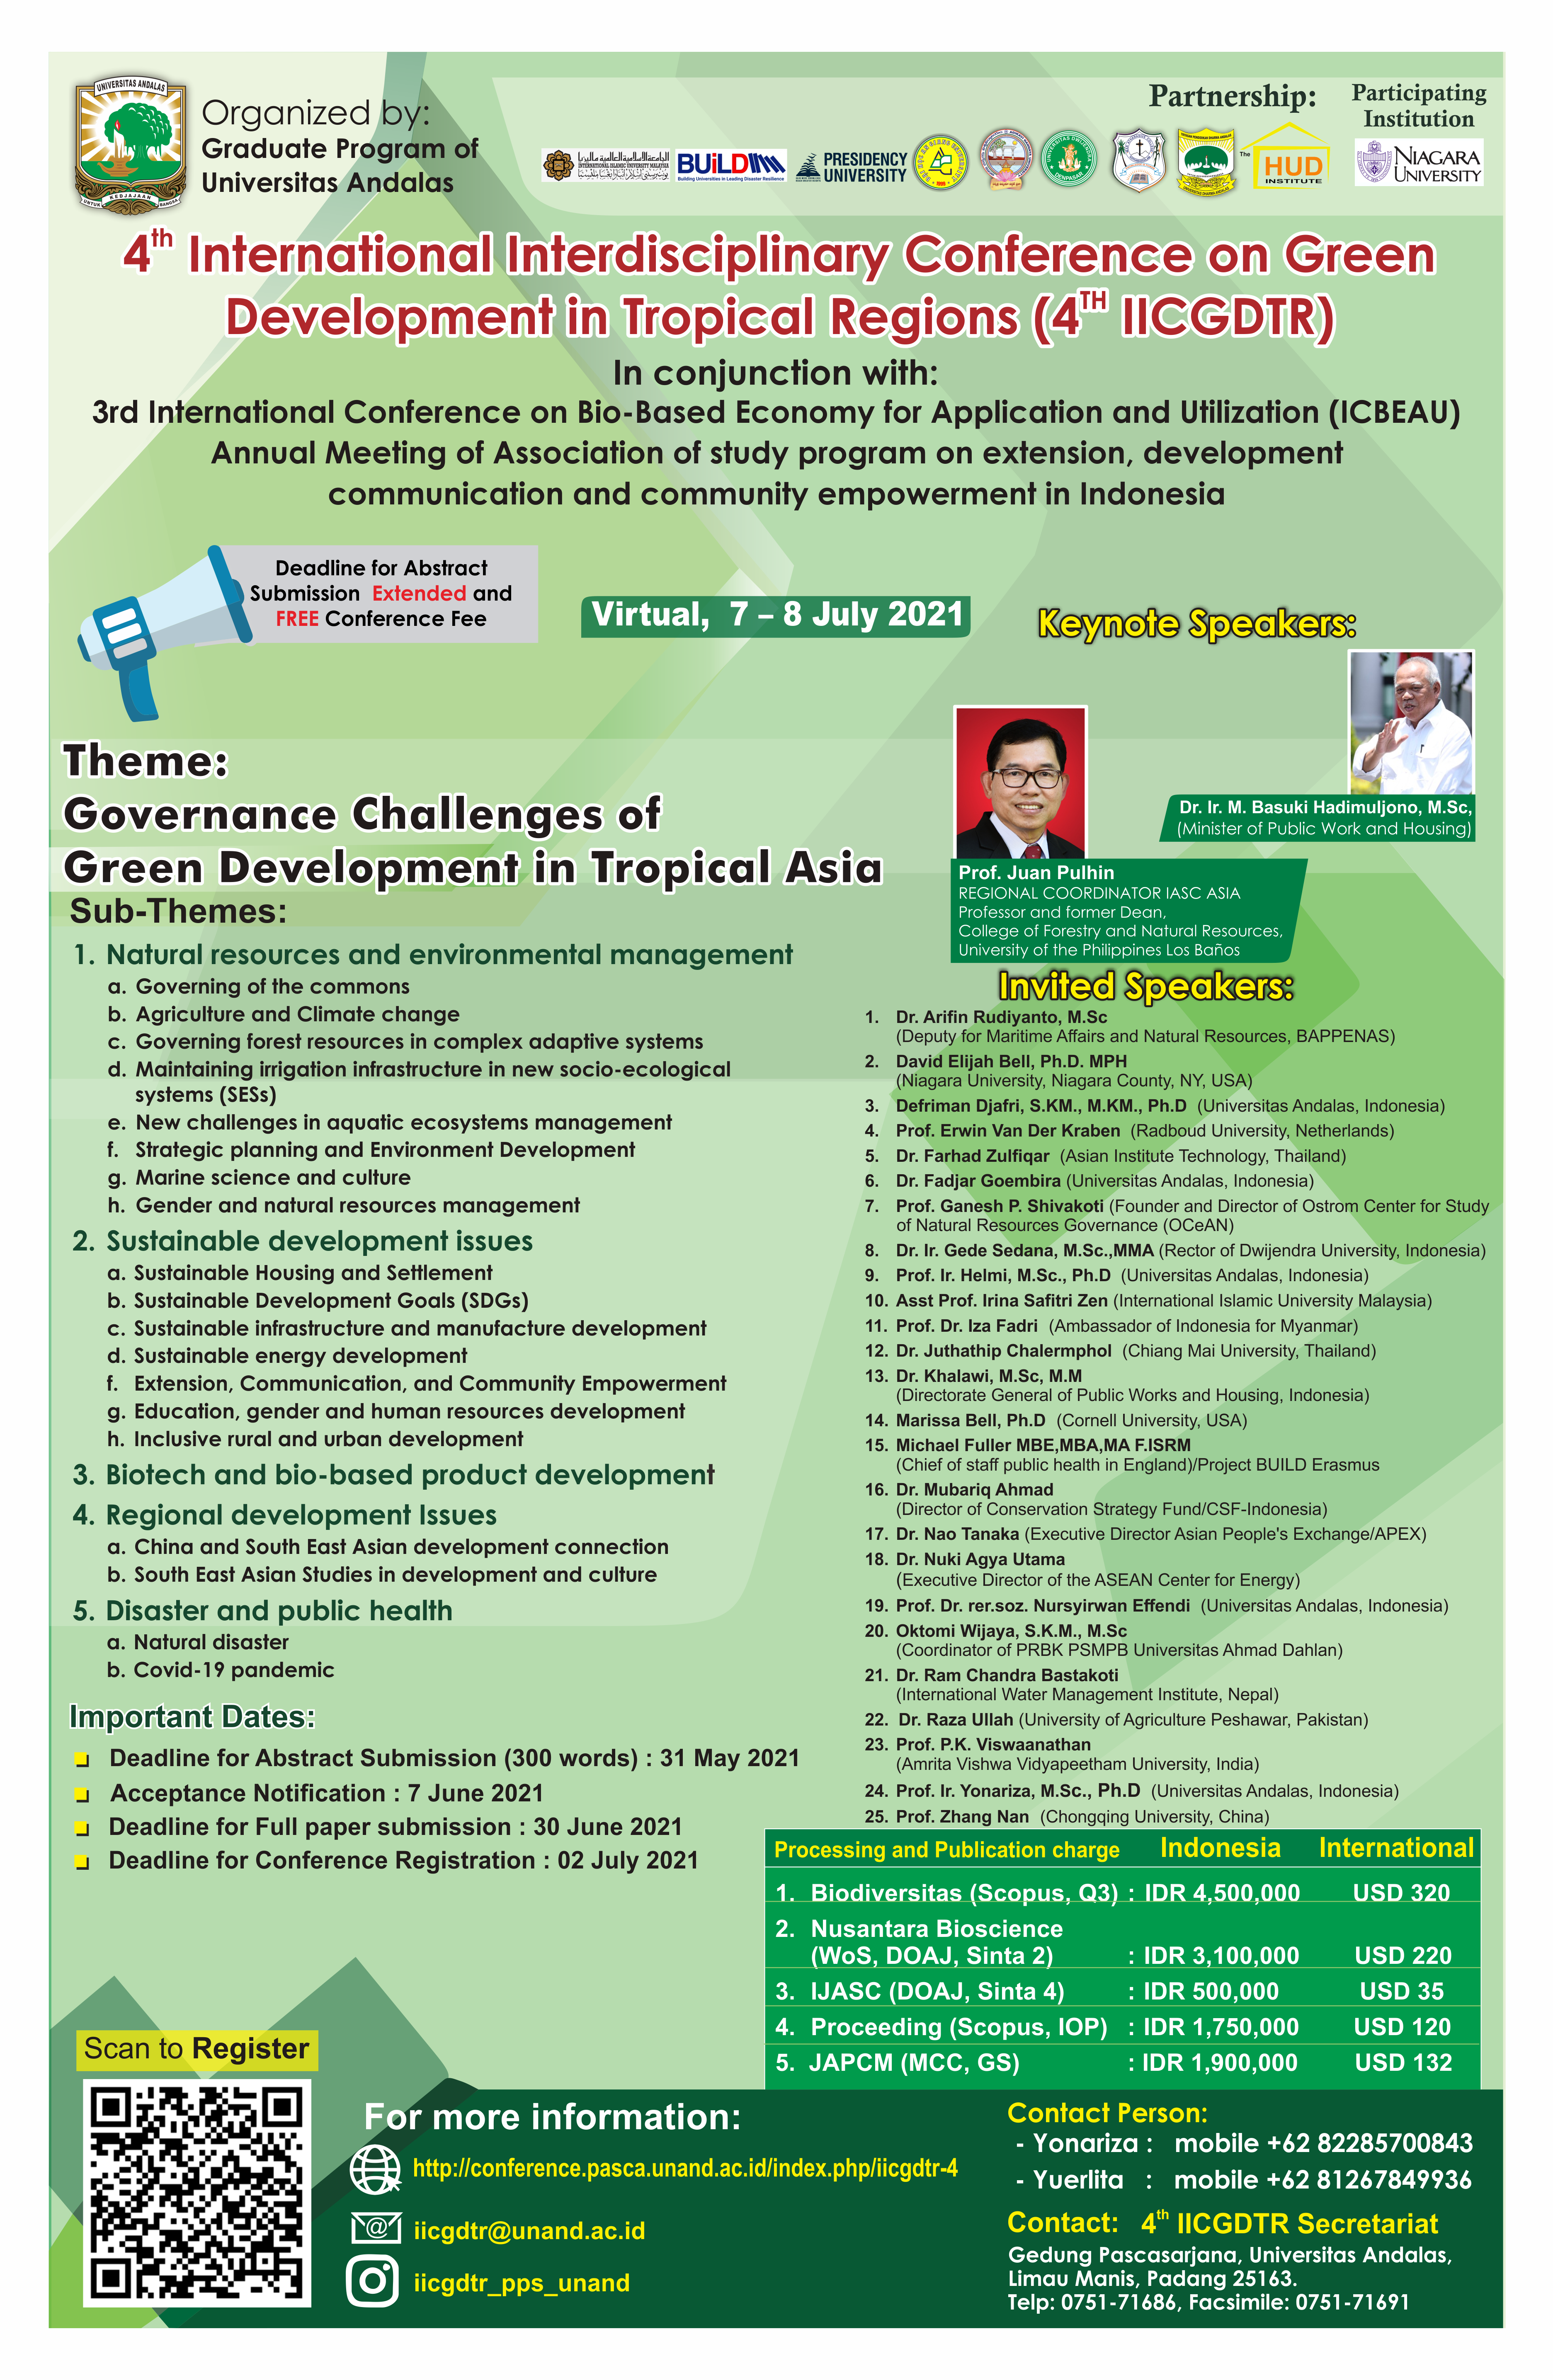 4th International Interdisciplinary Conference on Green Development in Tropical Regions (4th IICGDTR)